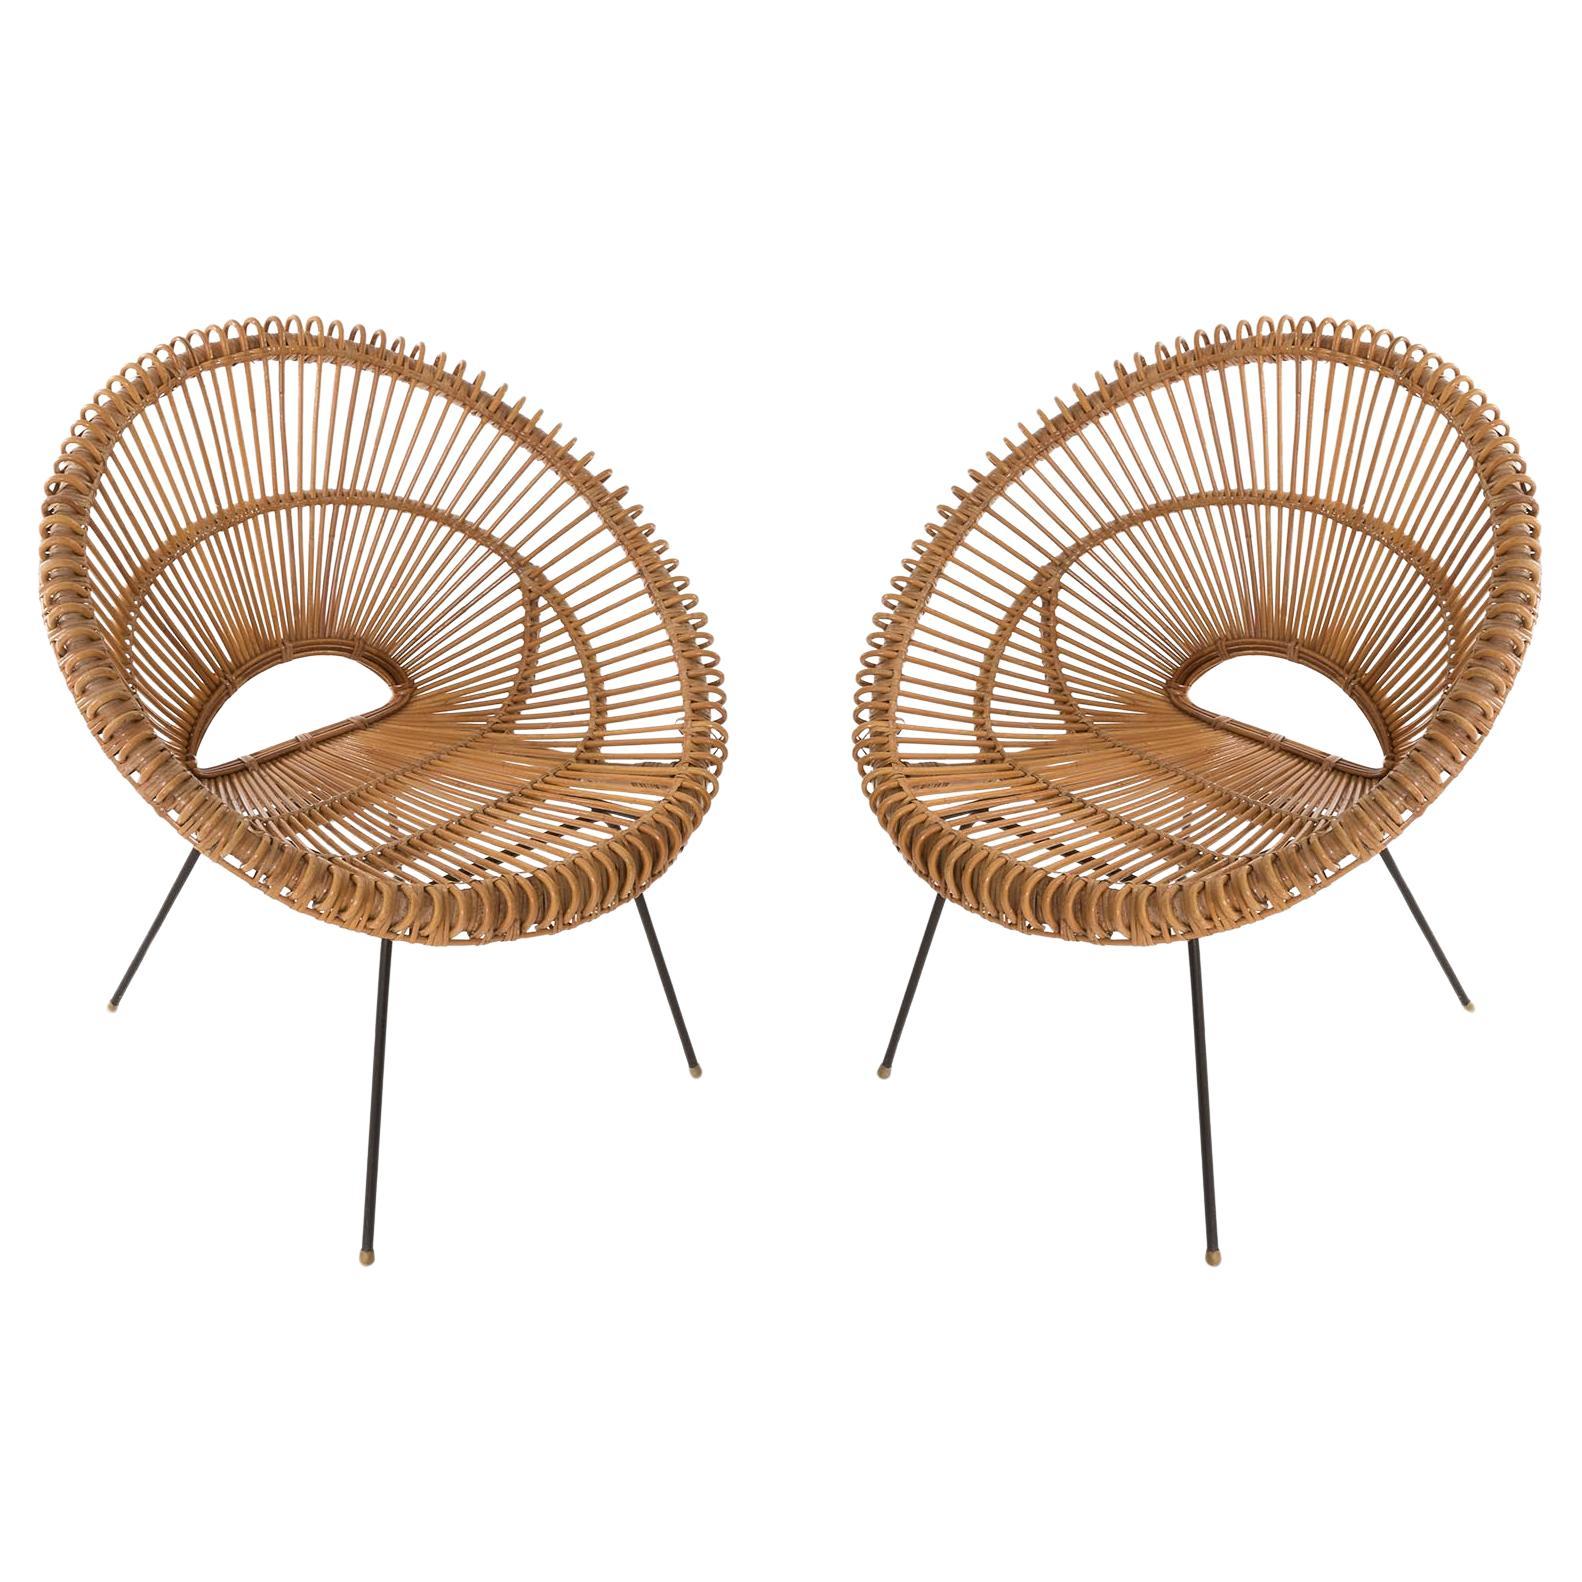 Pair of Mid-Century Modern Rattan Bamboo Chairs, Janine Abraham, Dirk Rol, 1960s